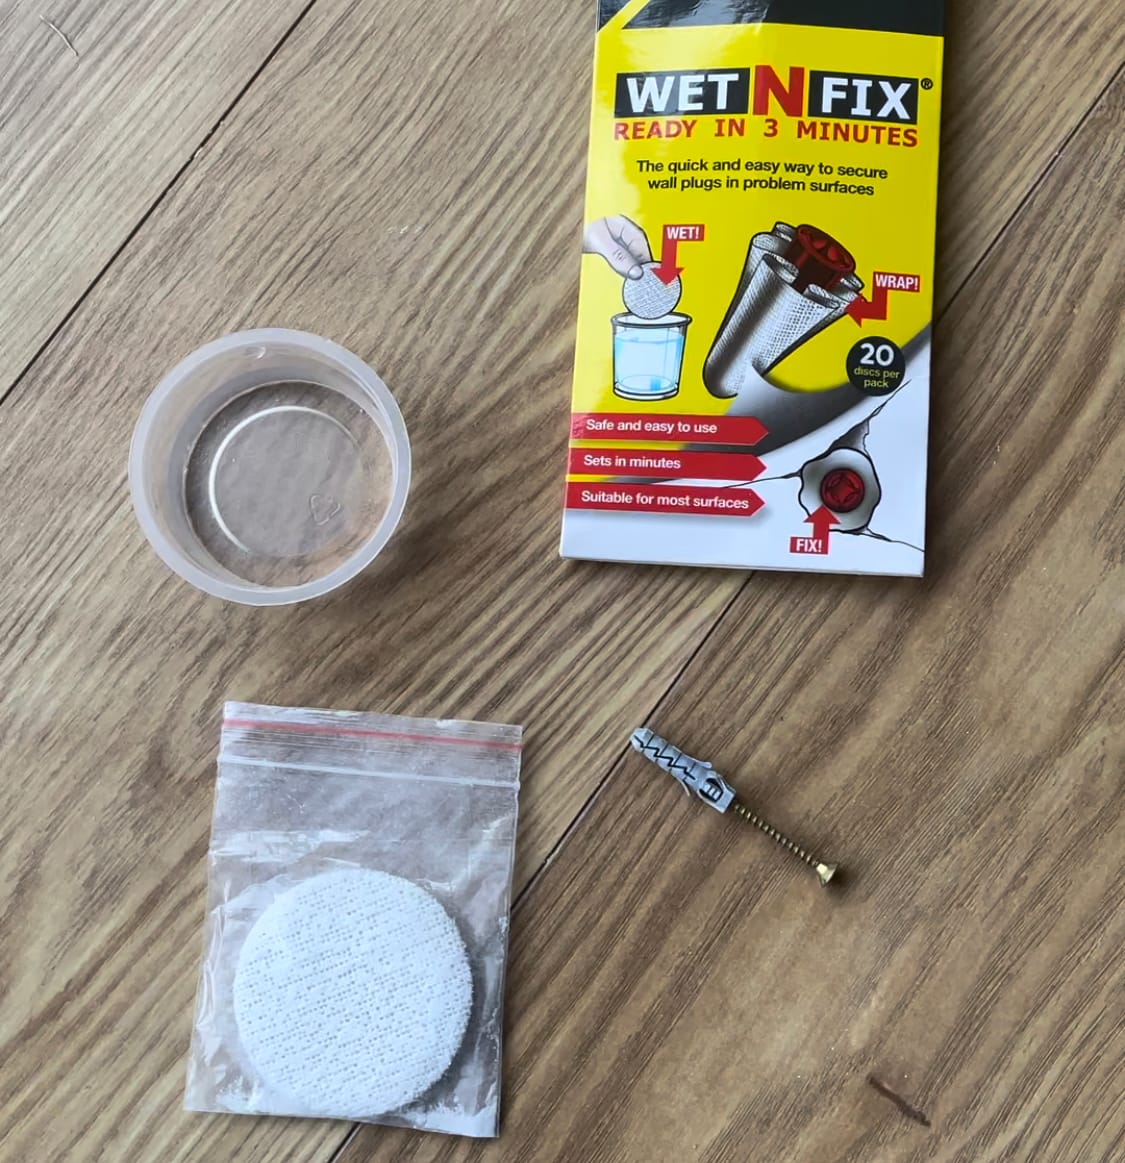 A review of Wet 'n' Fix repair pads for loose rawl plugs